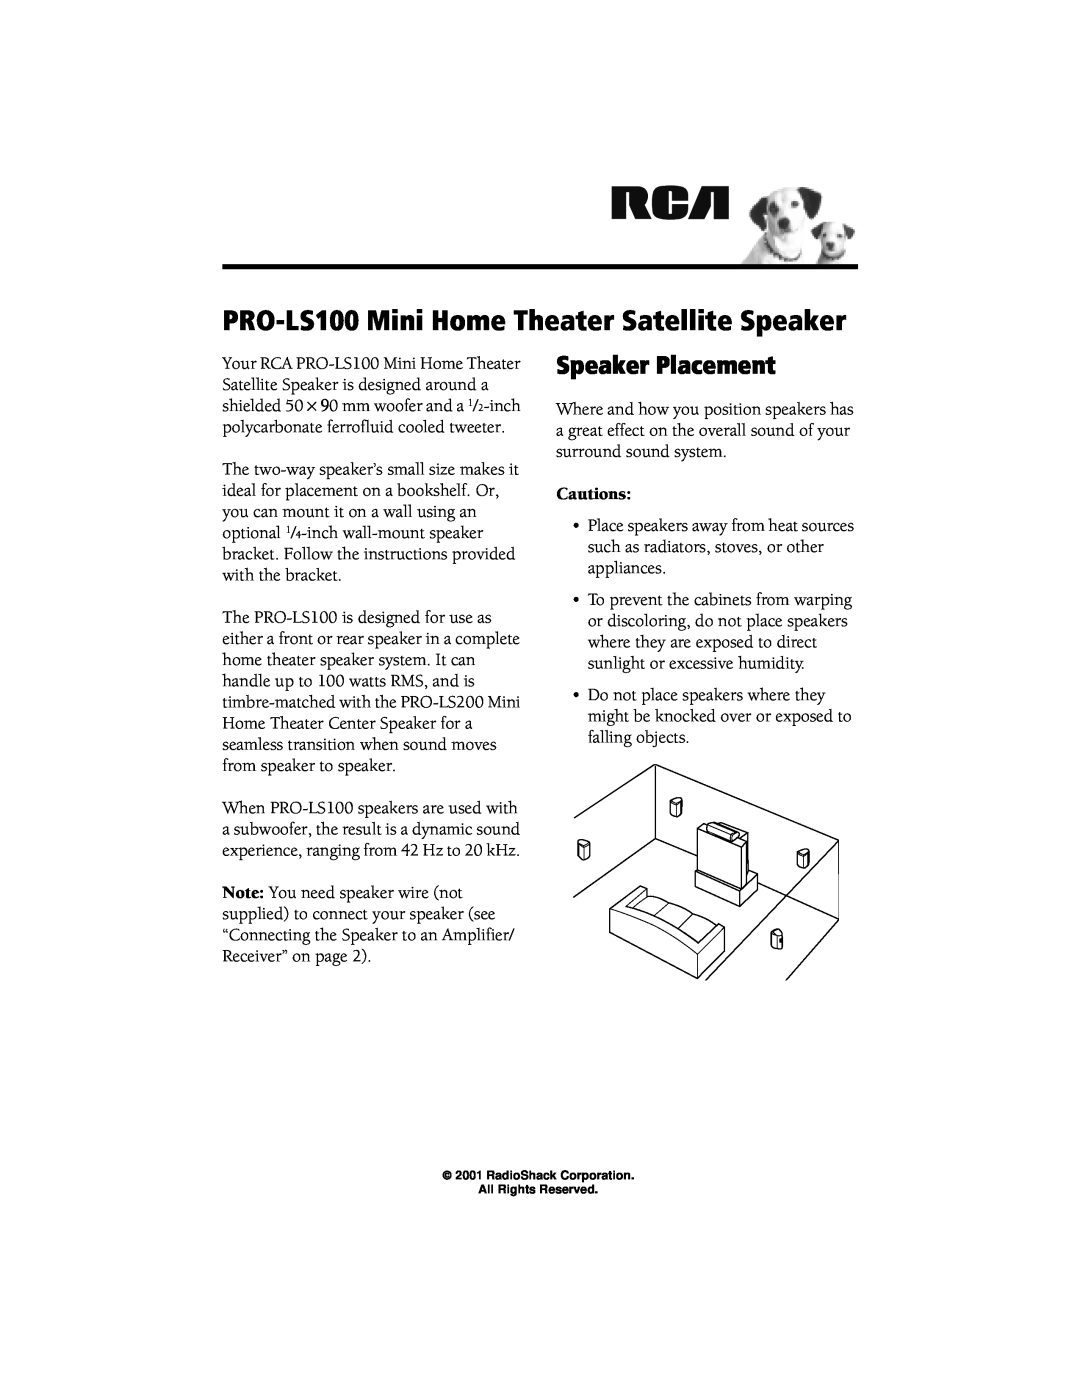 RCA manual Speaker Placement, Cautions, PRO-LS100Mini Home Theater Satellite Speaker 